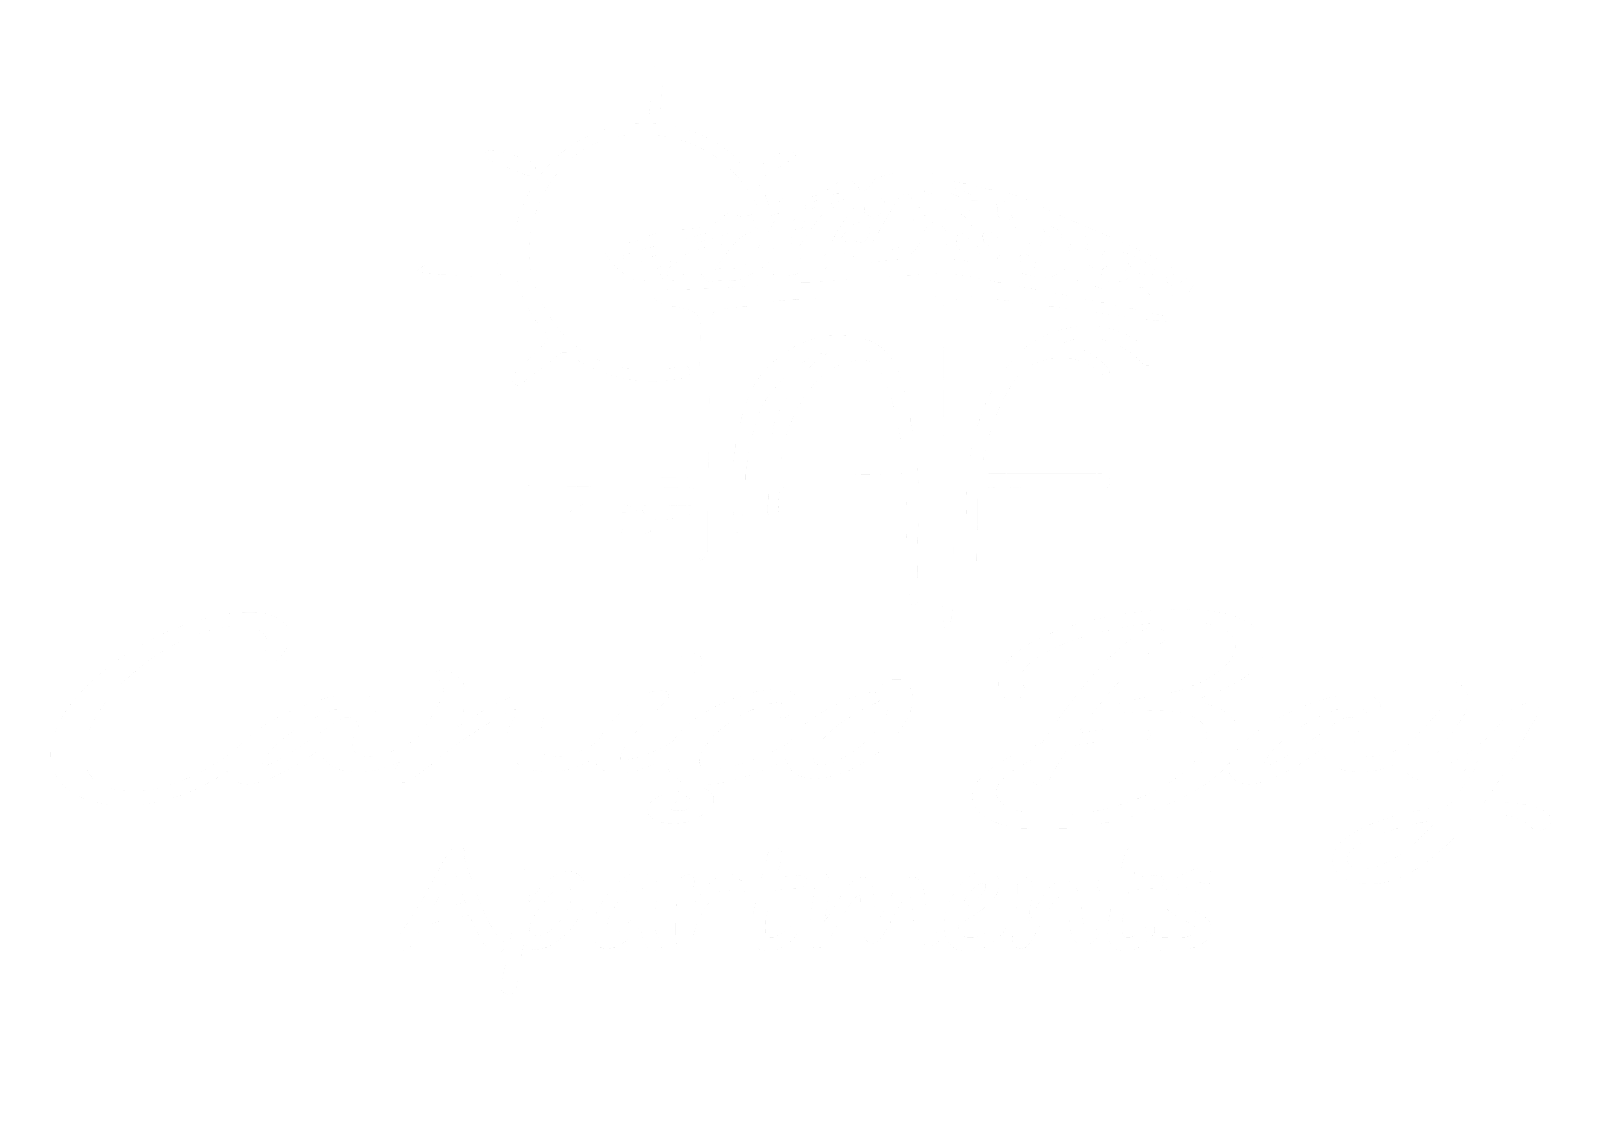 Rooms - Caniço Bay Apartments